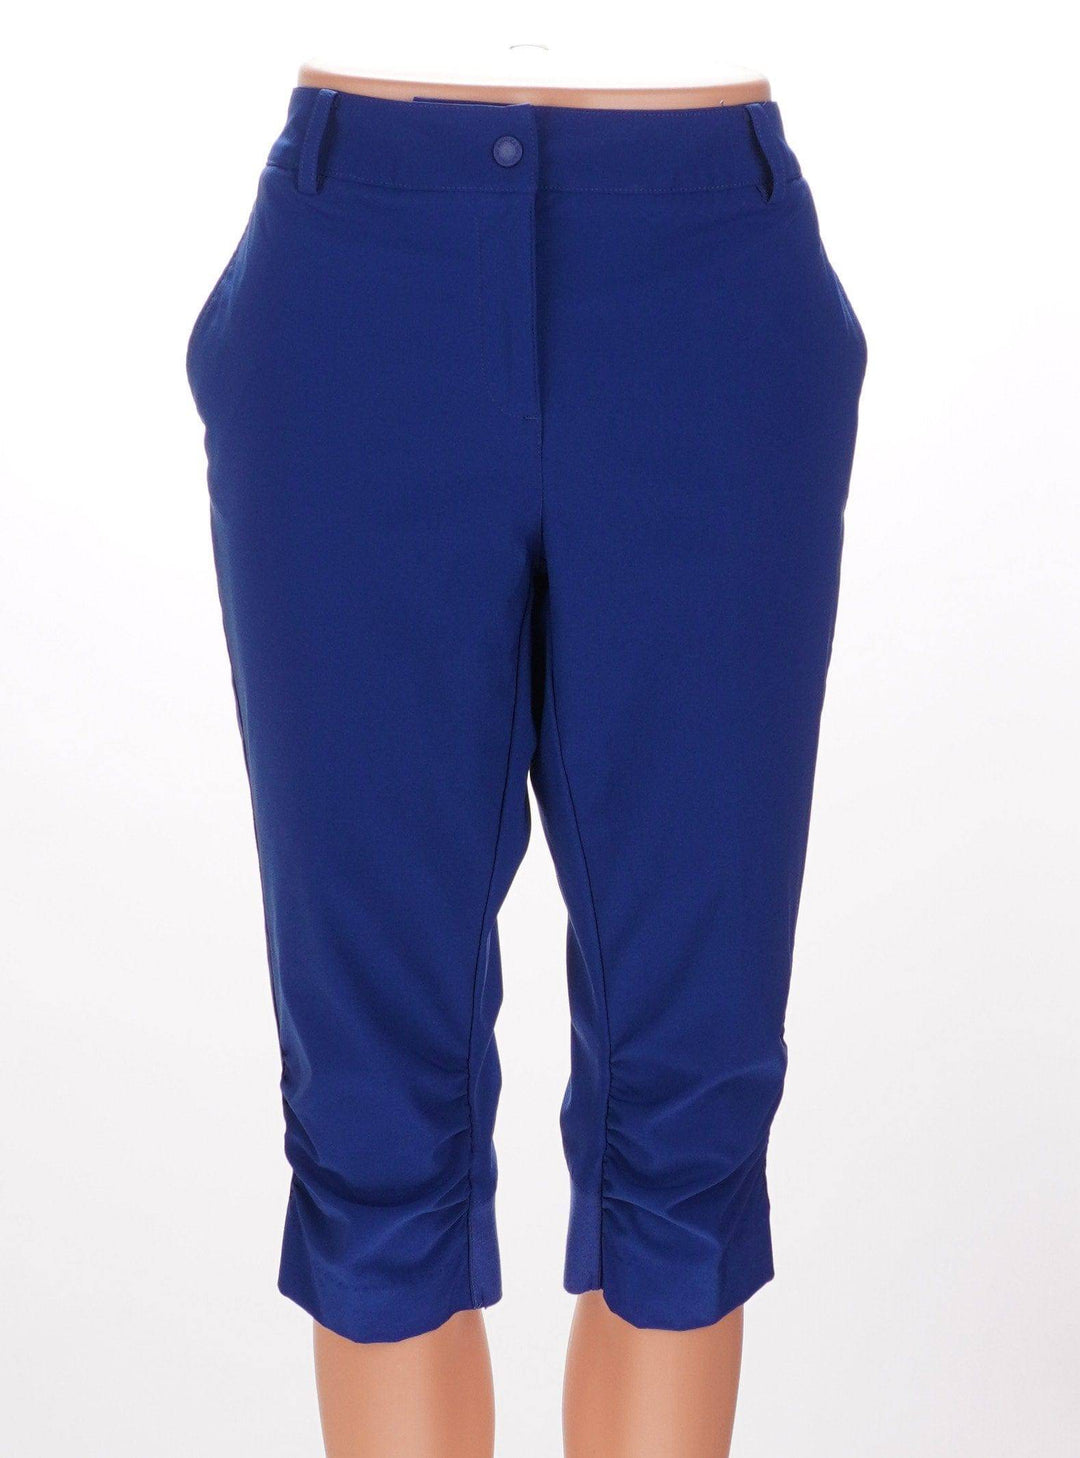 Annika 8 / Blue / Consigned Annika Golf Shorts - Blue - Size 8